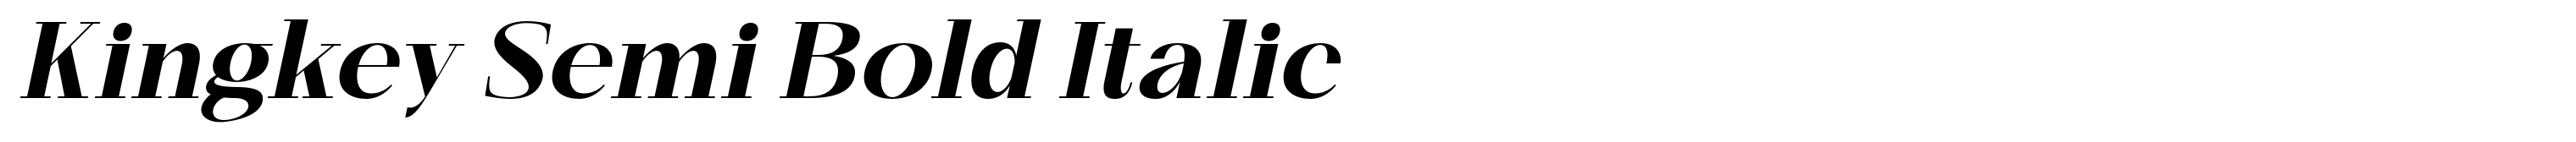 Kingkey Semi Bold Italic